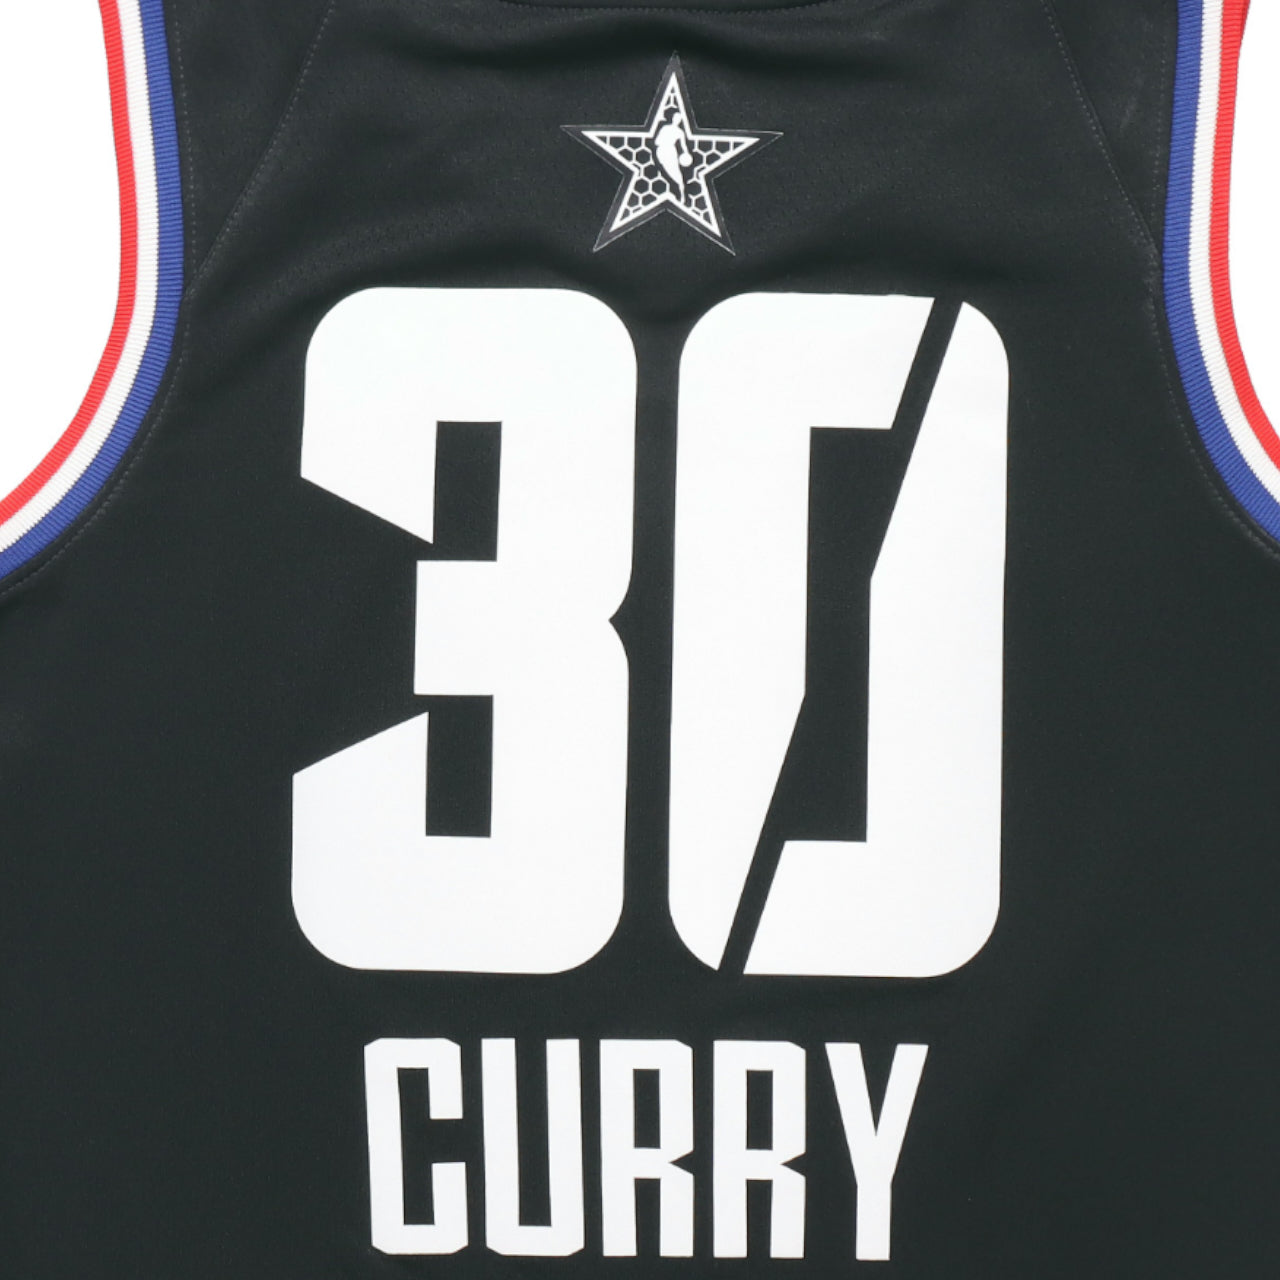 Stephen Curry 2019 All-Star Game Nike Swingman Jersey - Black